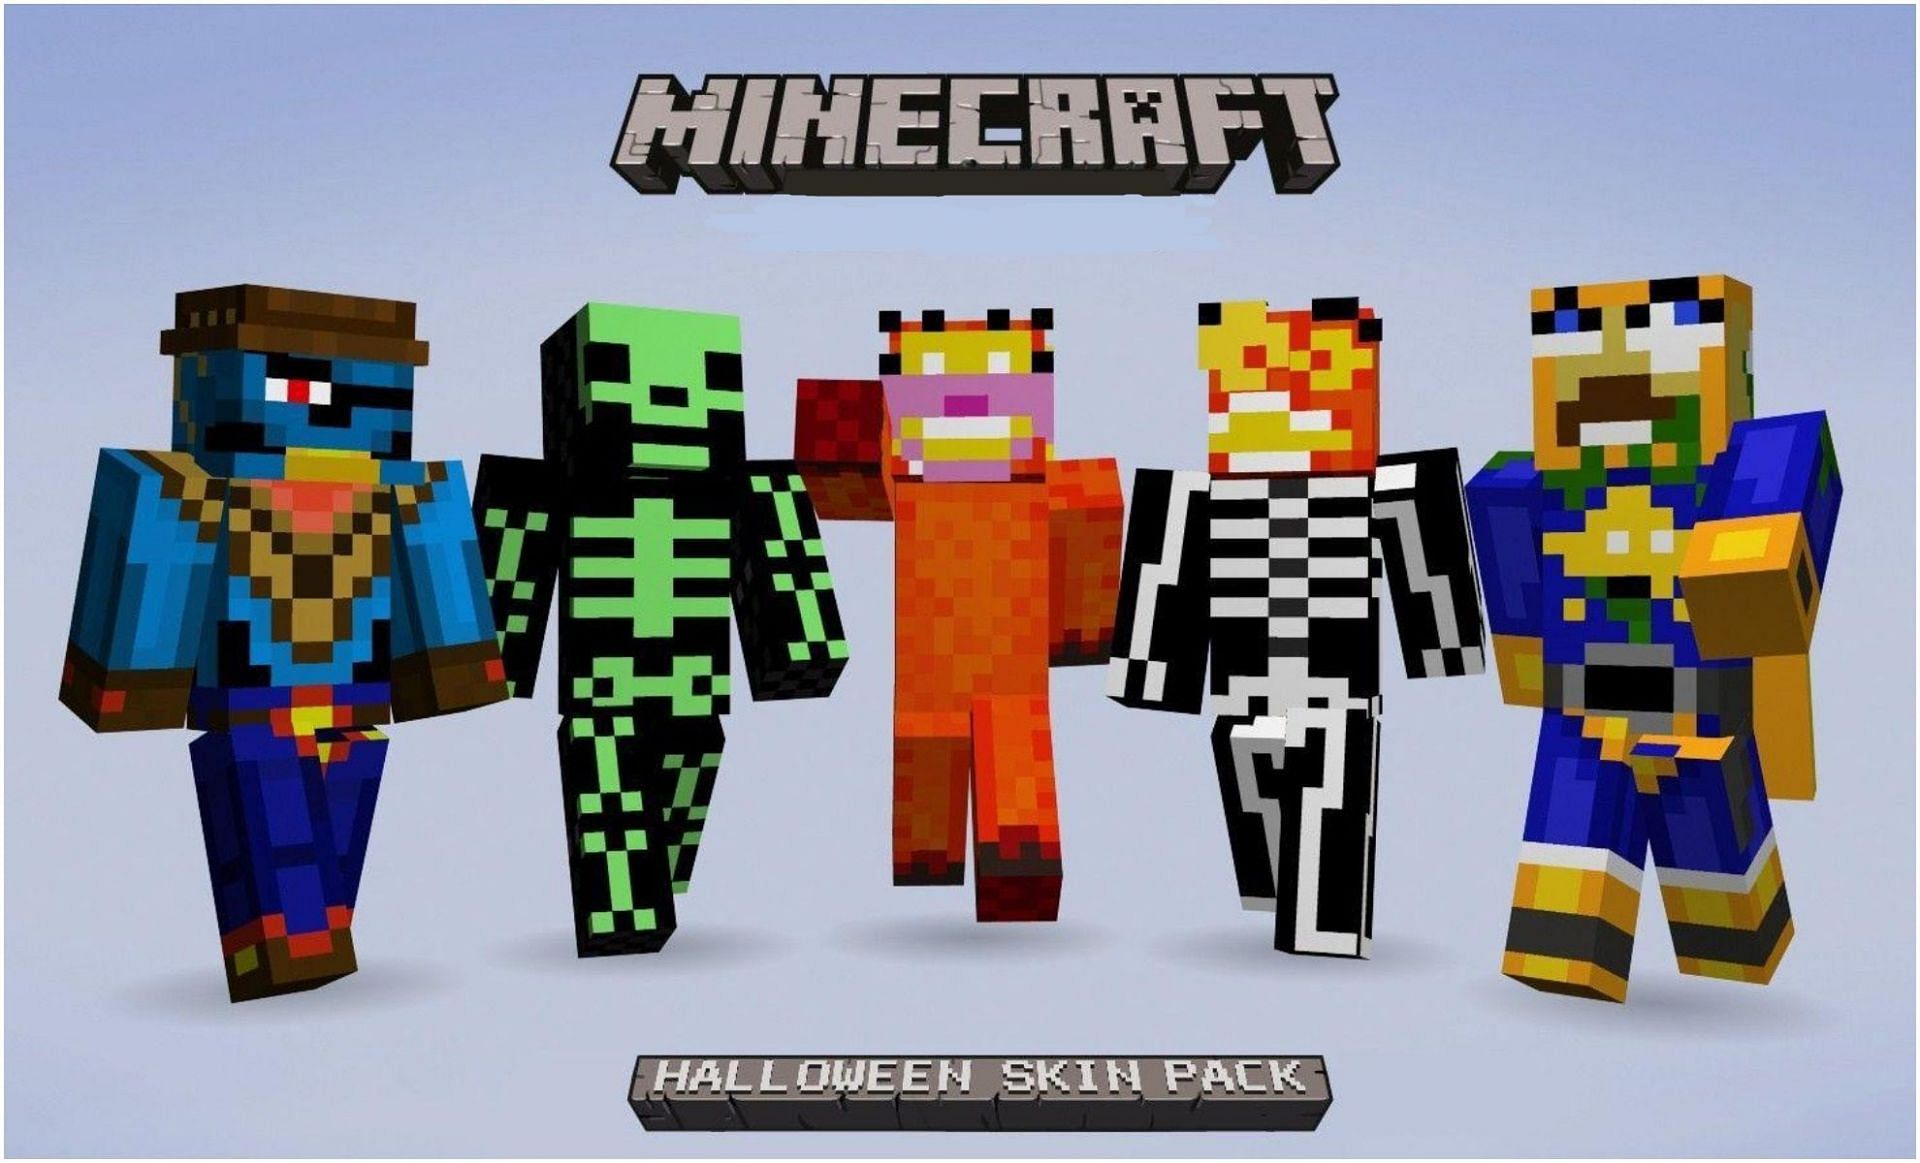 Halloween skins in Minecraft (Image via (WallpaperAccess/Minecraft)